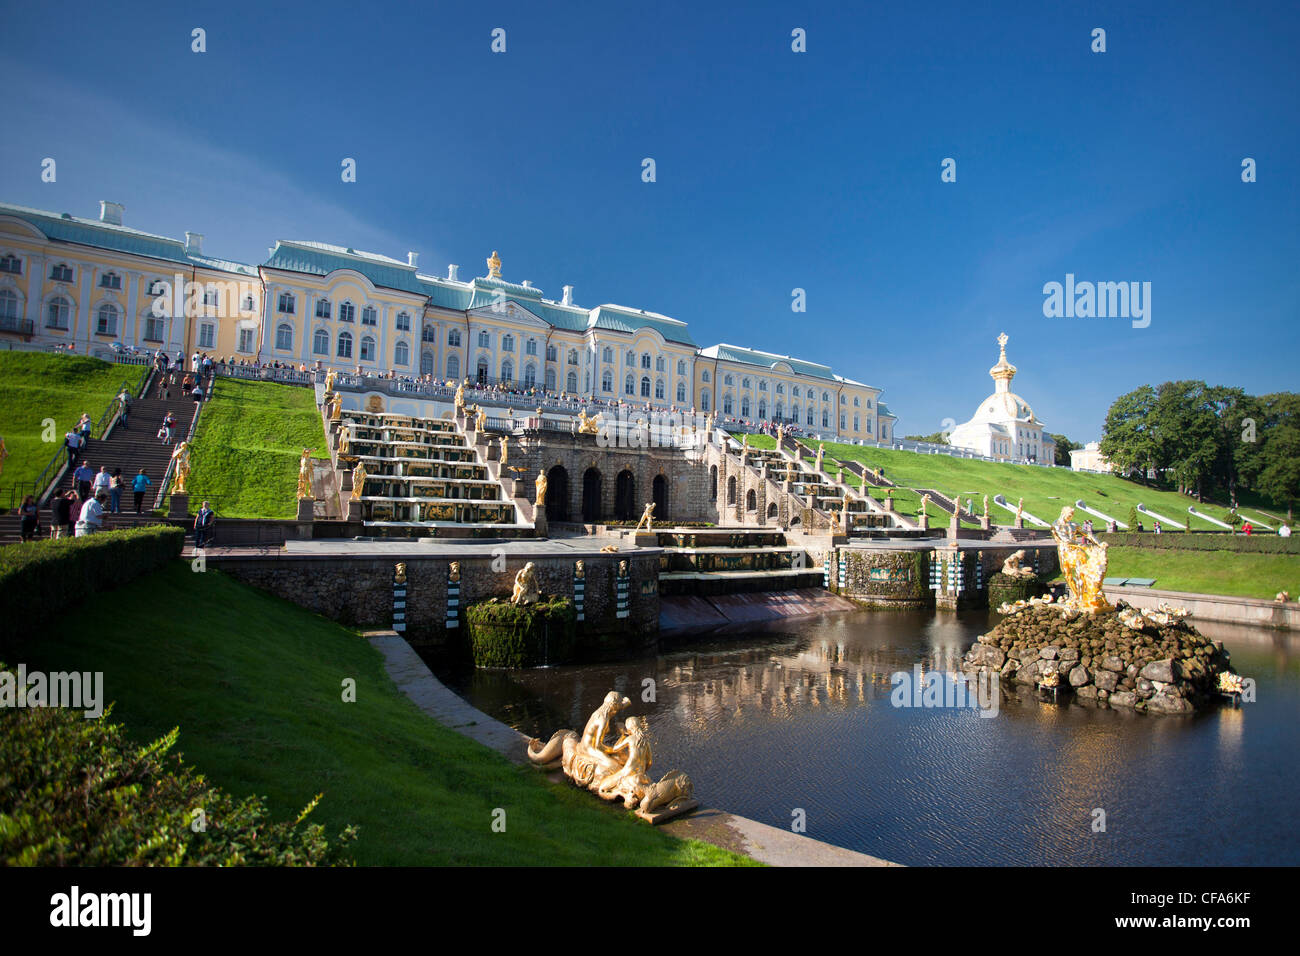 Russia, Europa, San Pietroburgo, Peterburg, città di Peterhof Palace, il Summer Palace, patrimonio mondiale, parco Foto Stock